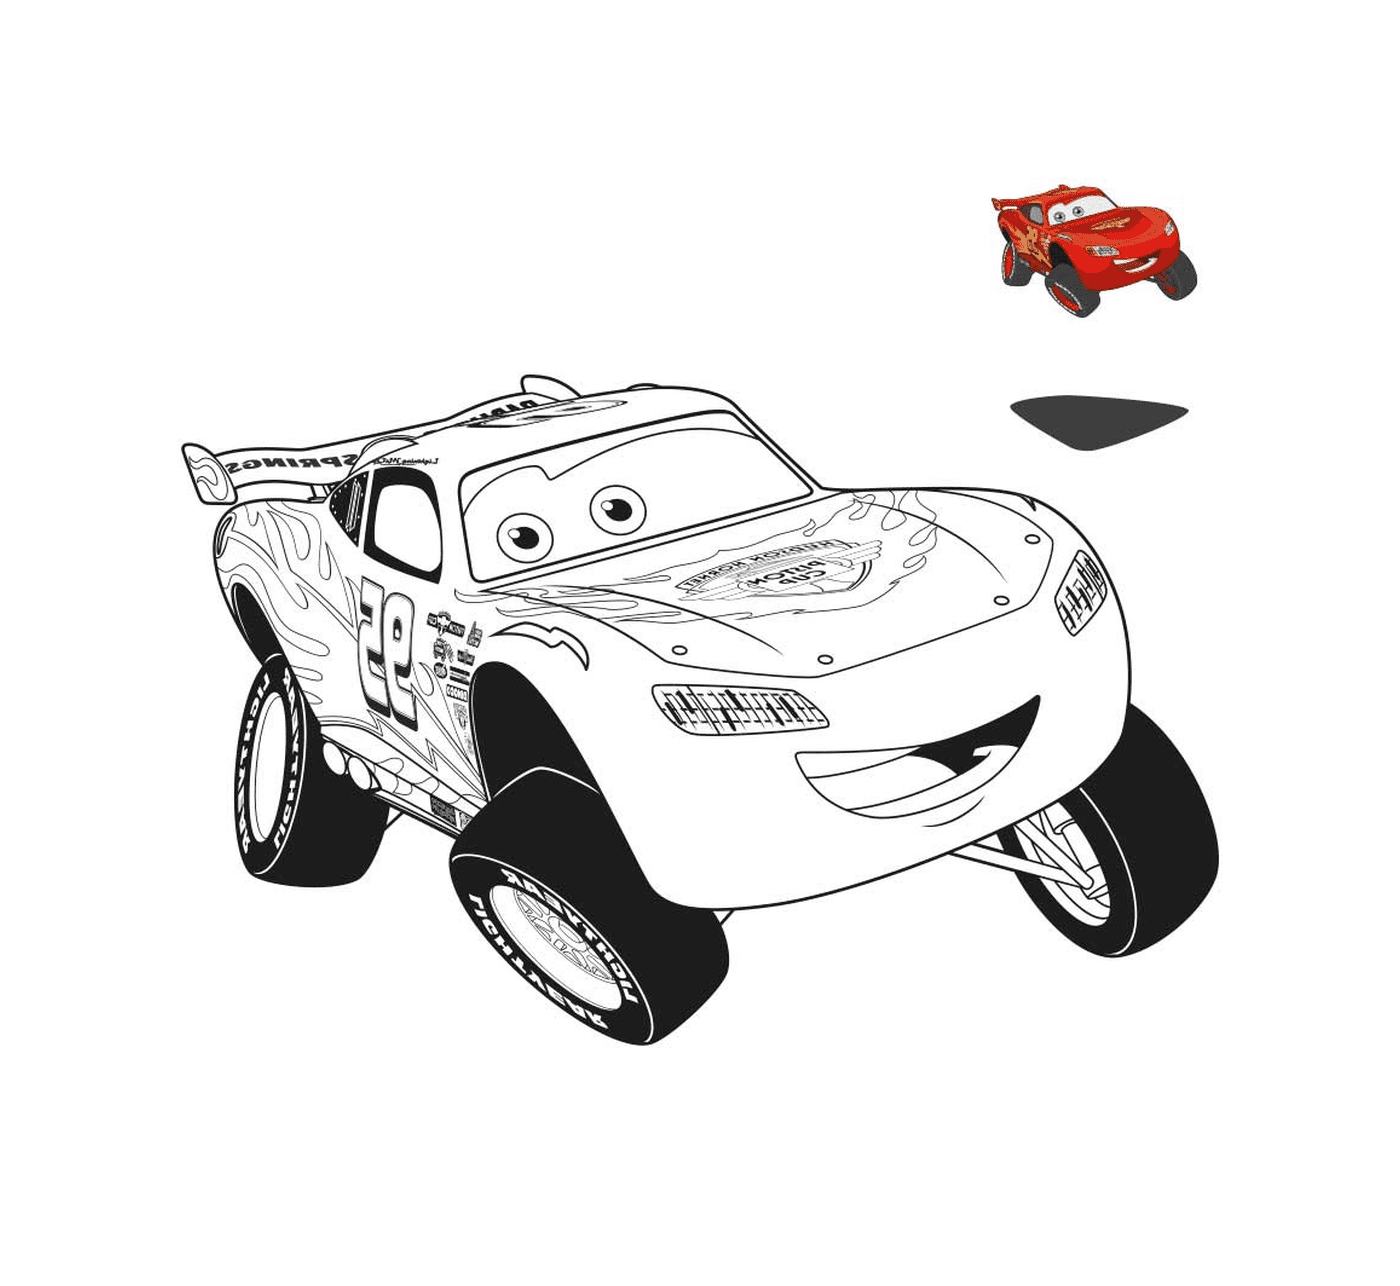  Salto del coche flash de McQueen 